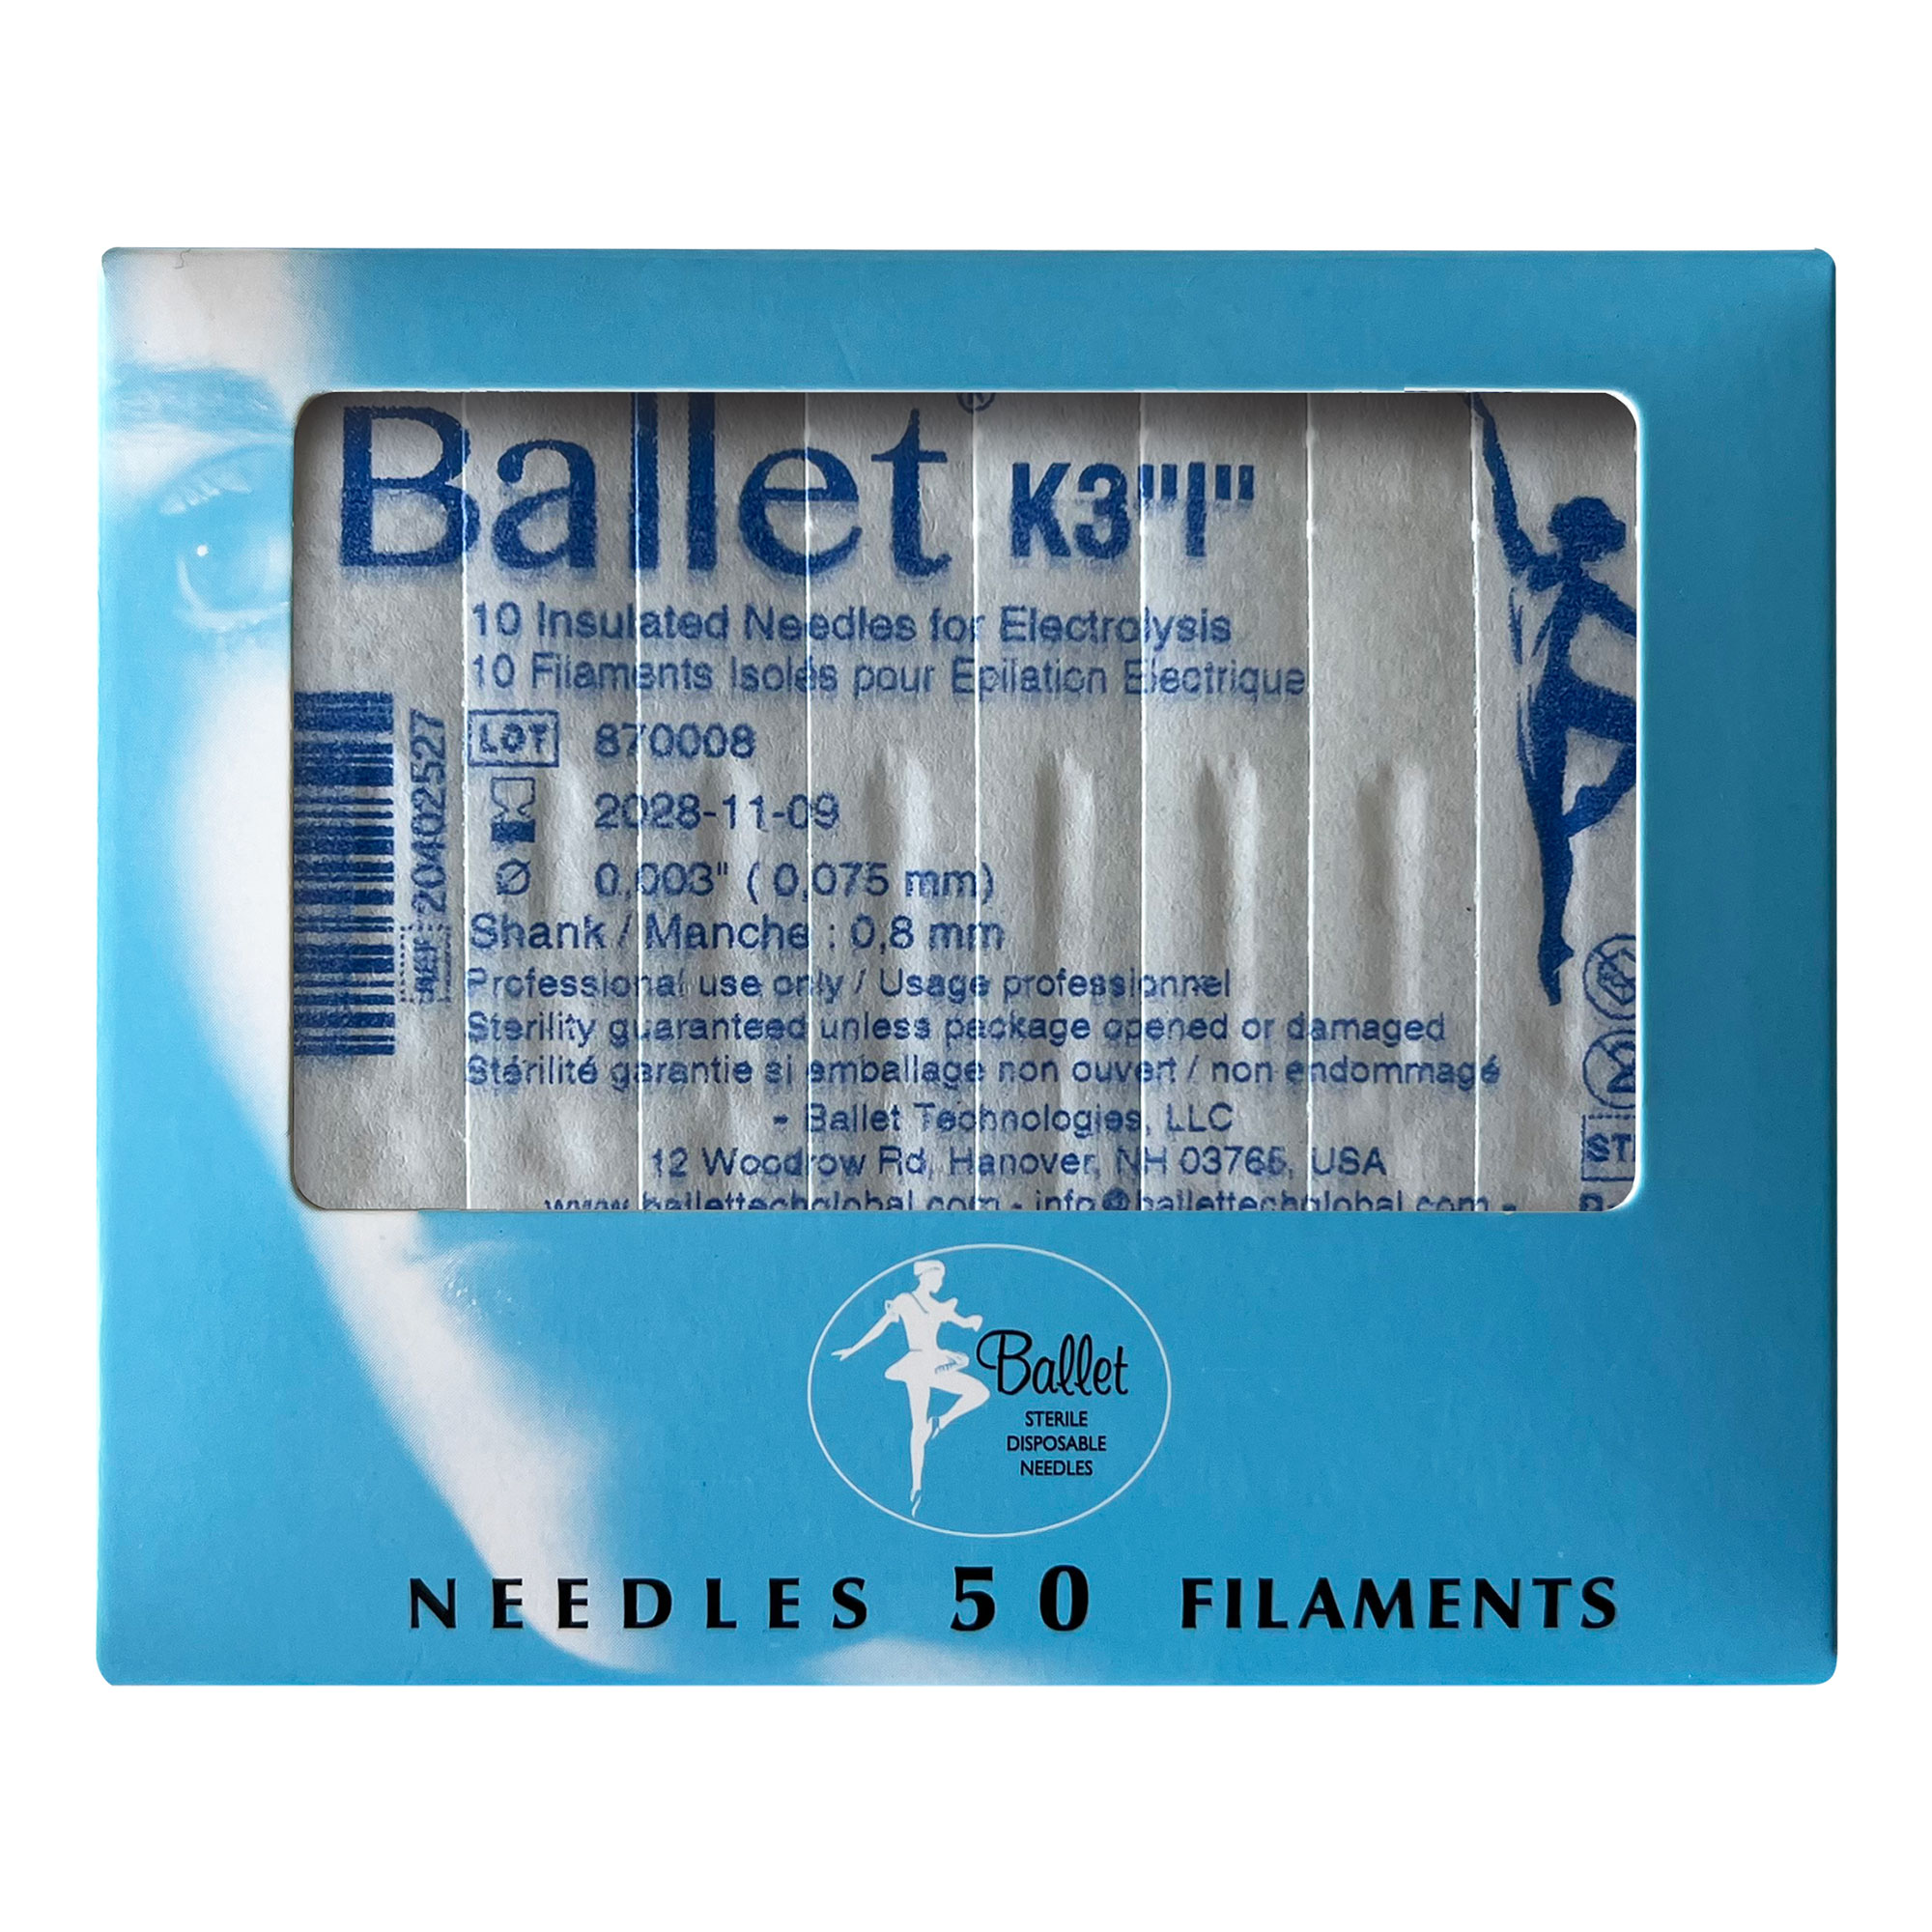 Sterile insulated Ballet needles for epilation 0.075 mm